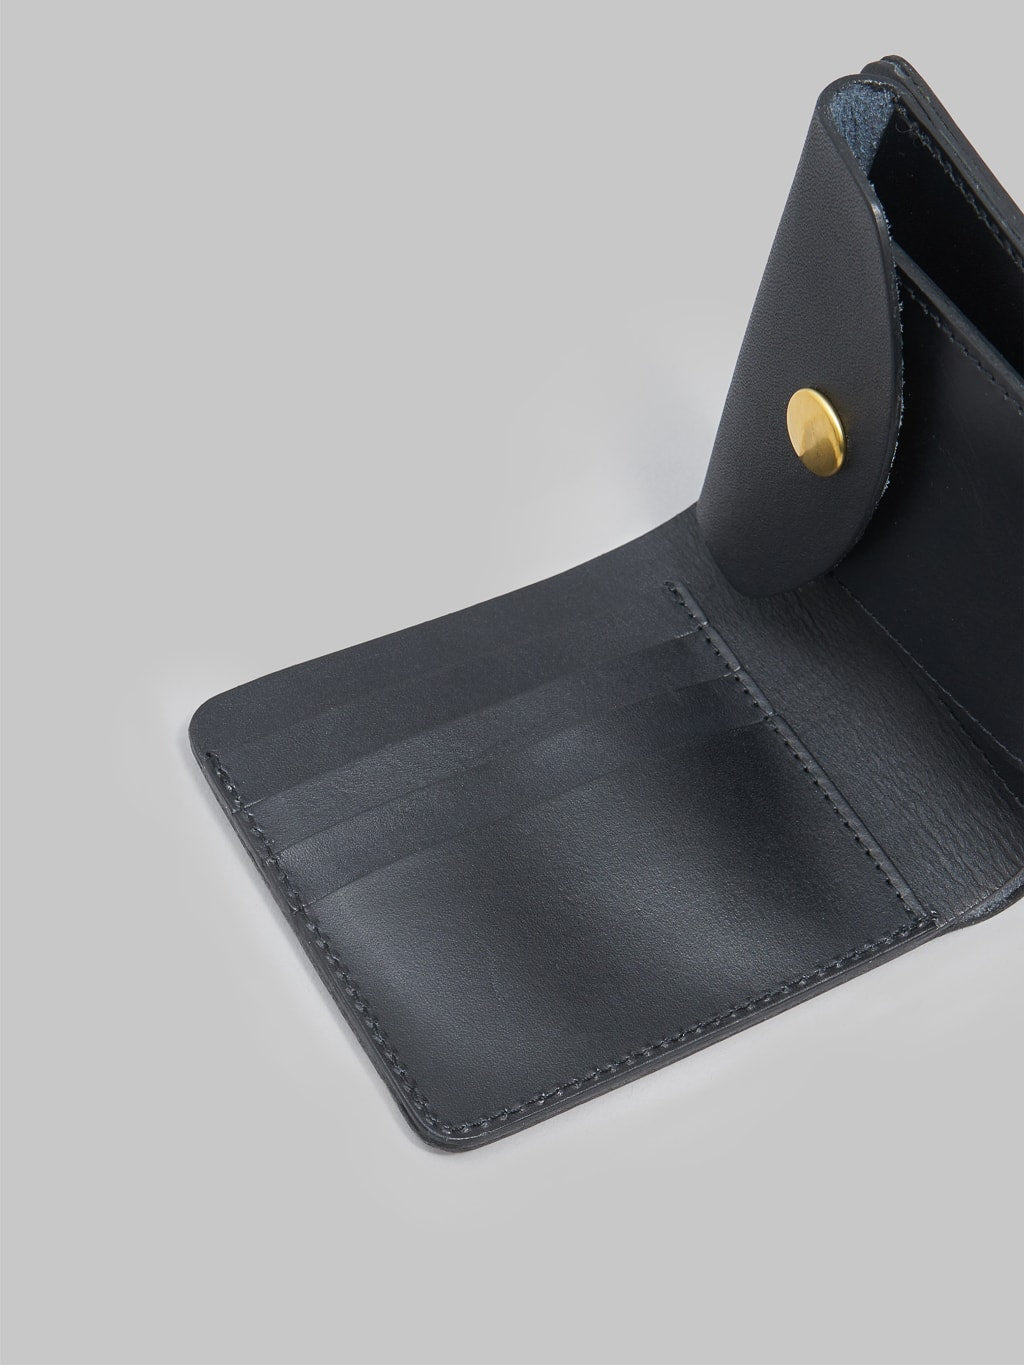 Kobashi Studio premium Leather Fold Wallet Black card slots